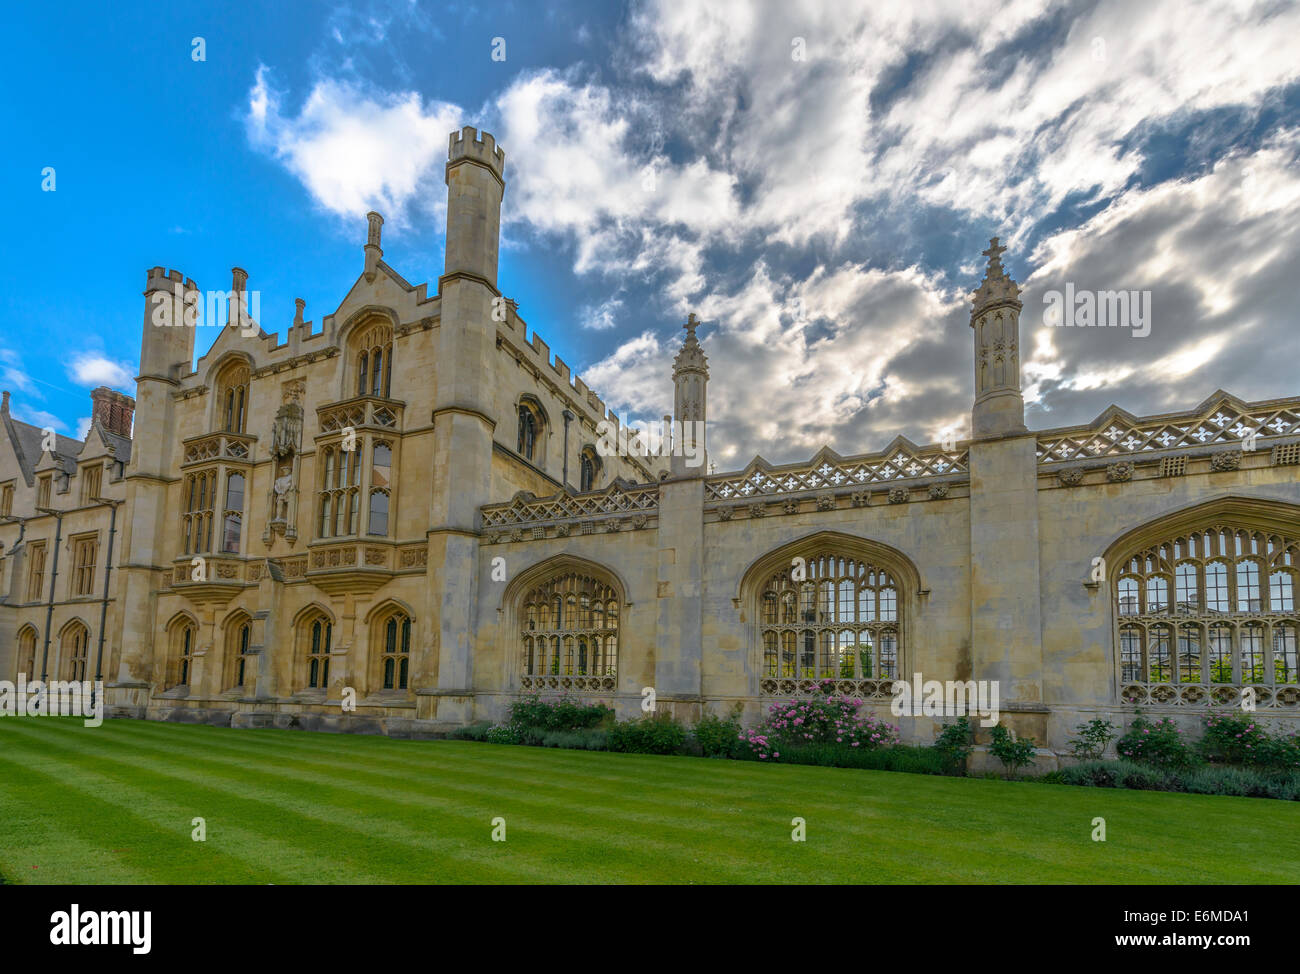 King's College at Cambridge University, England Stock Photo